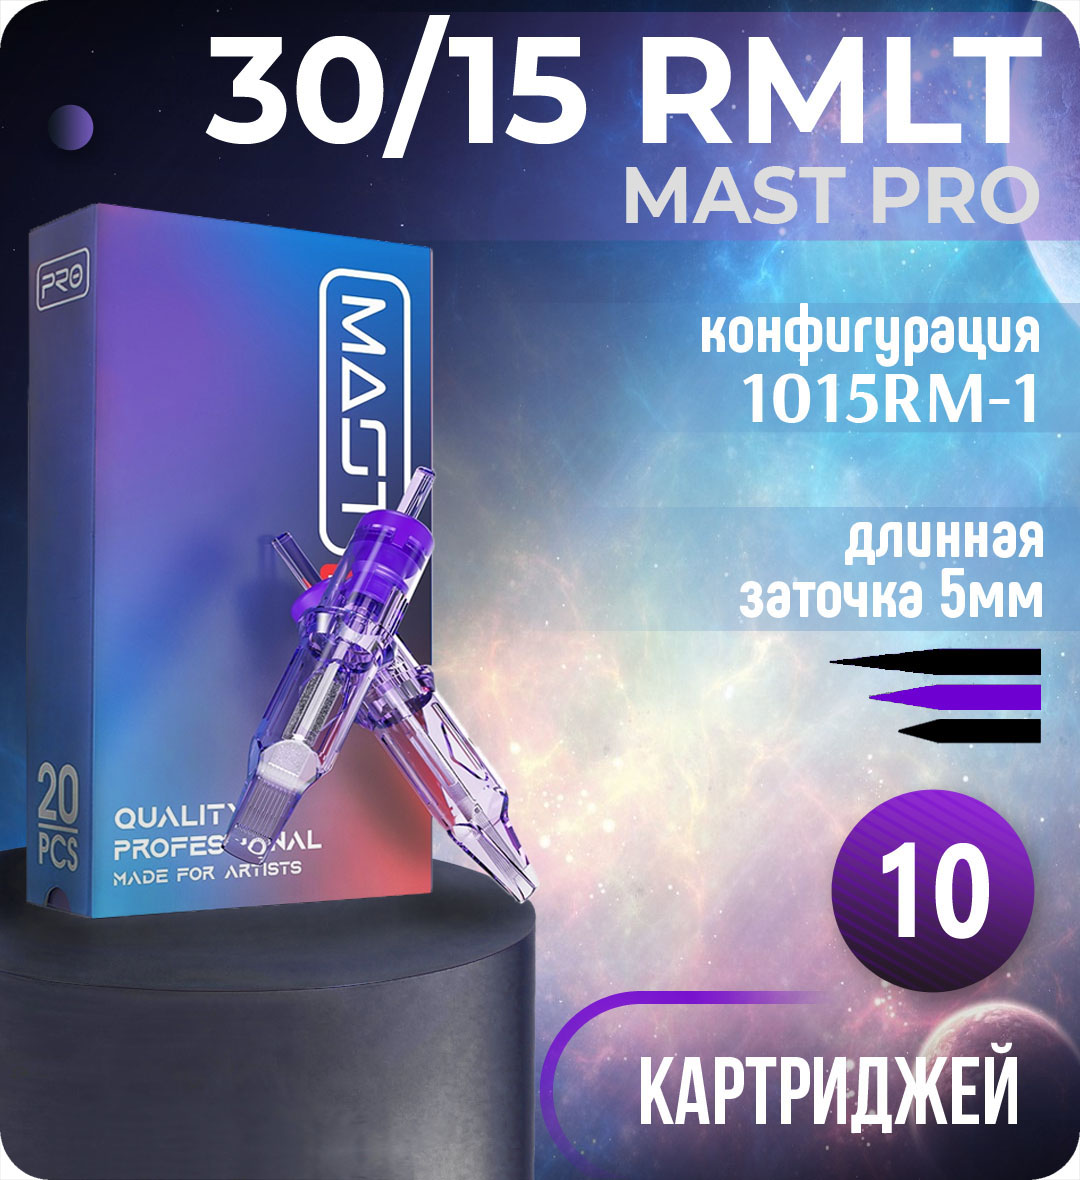 Картриджи Mast Pro 30/15 RMLT (1015RM-1) для тату, перманентного макияжа и татуажа Dragonhawk 10шт